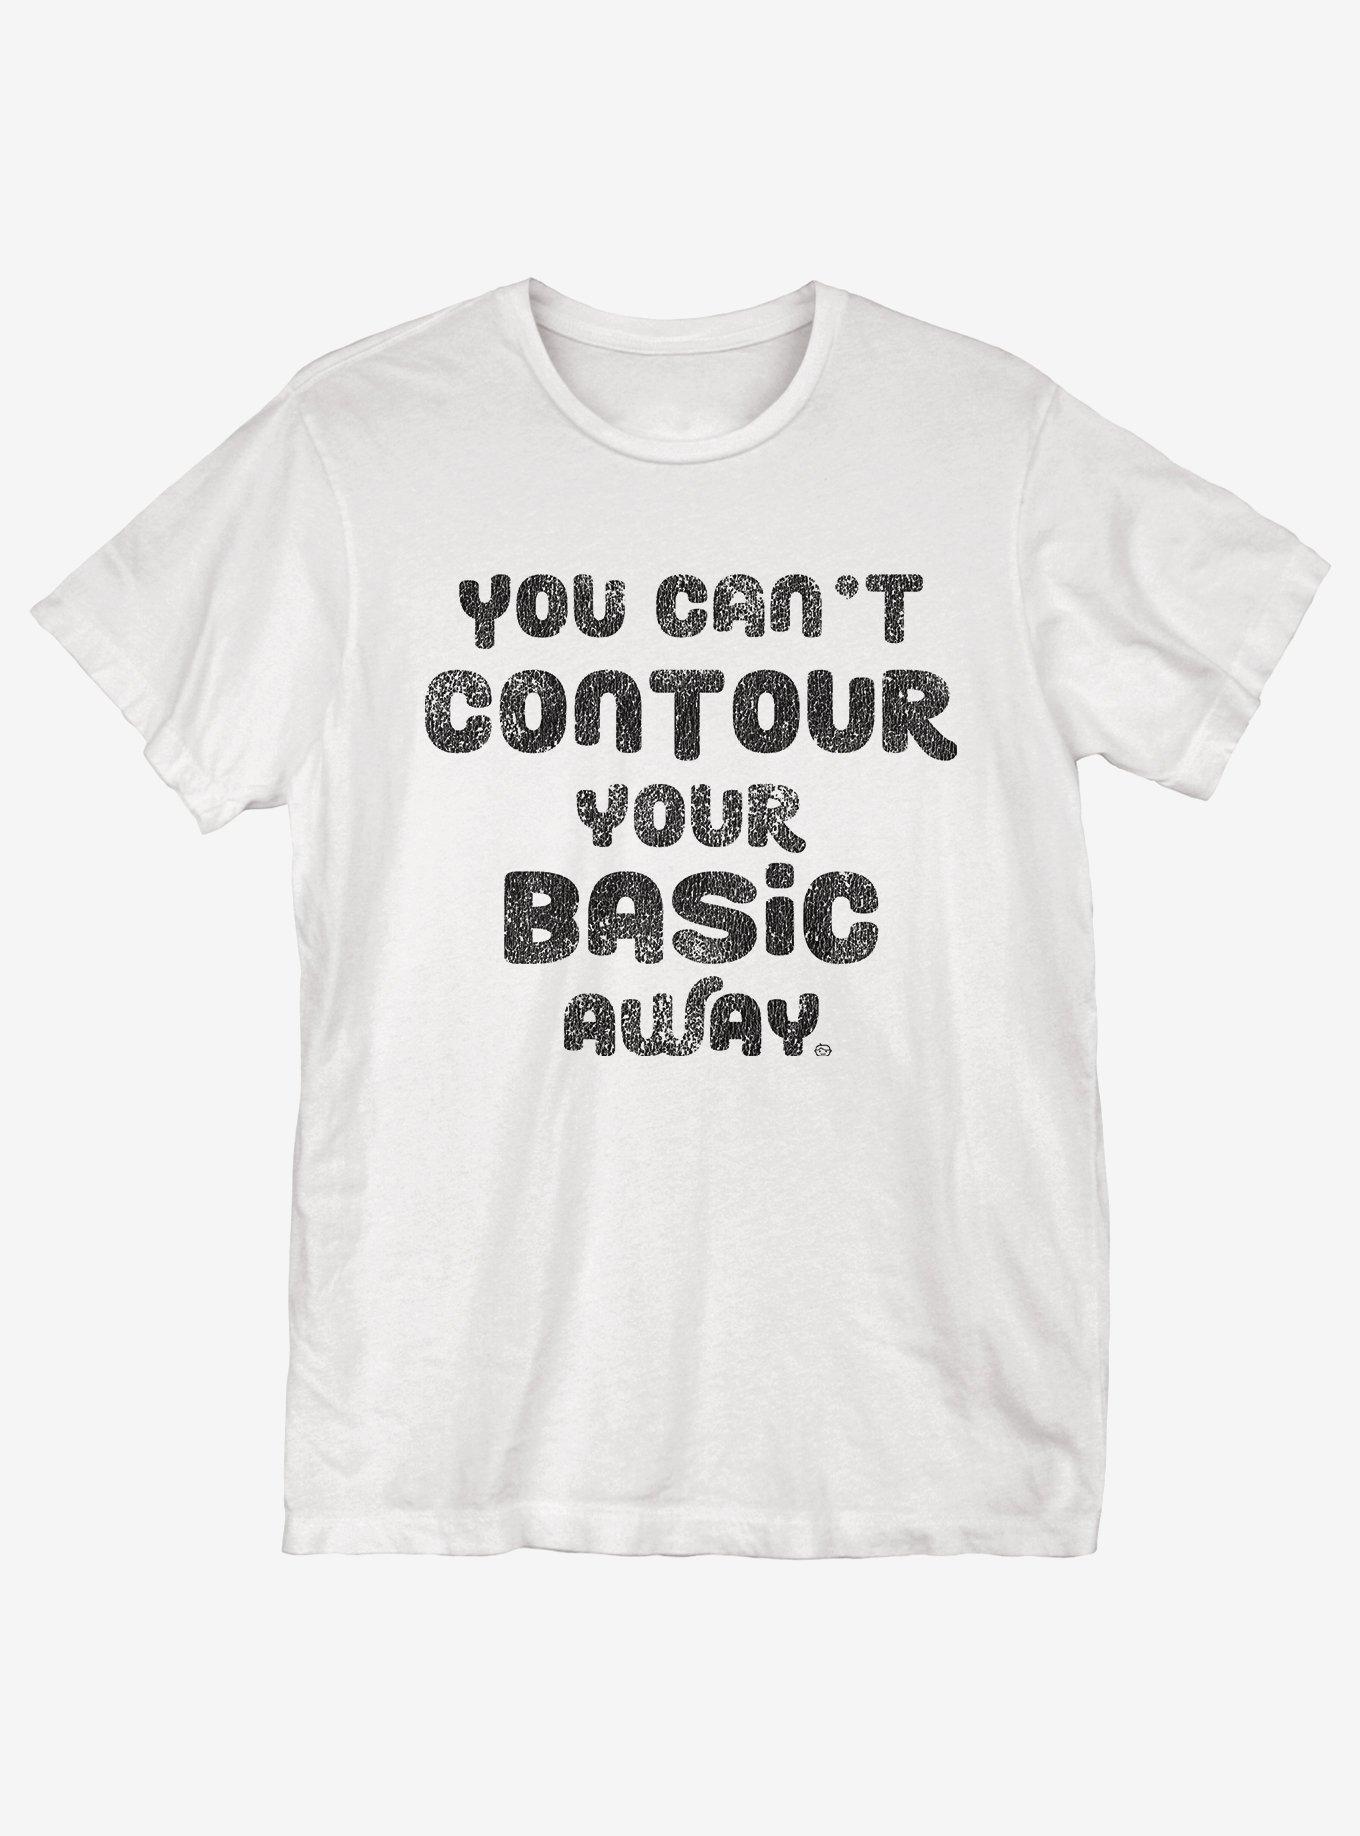 Contour Away T-Shirt, WHITE, hi-res